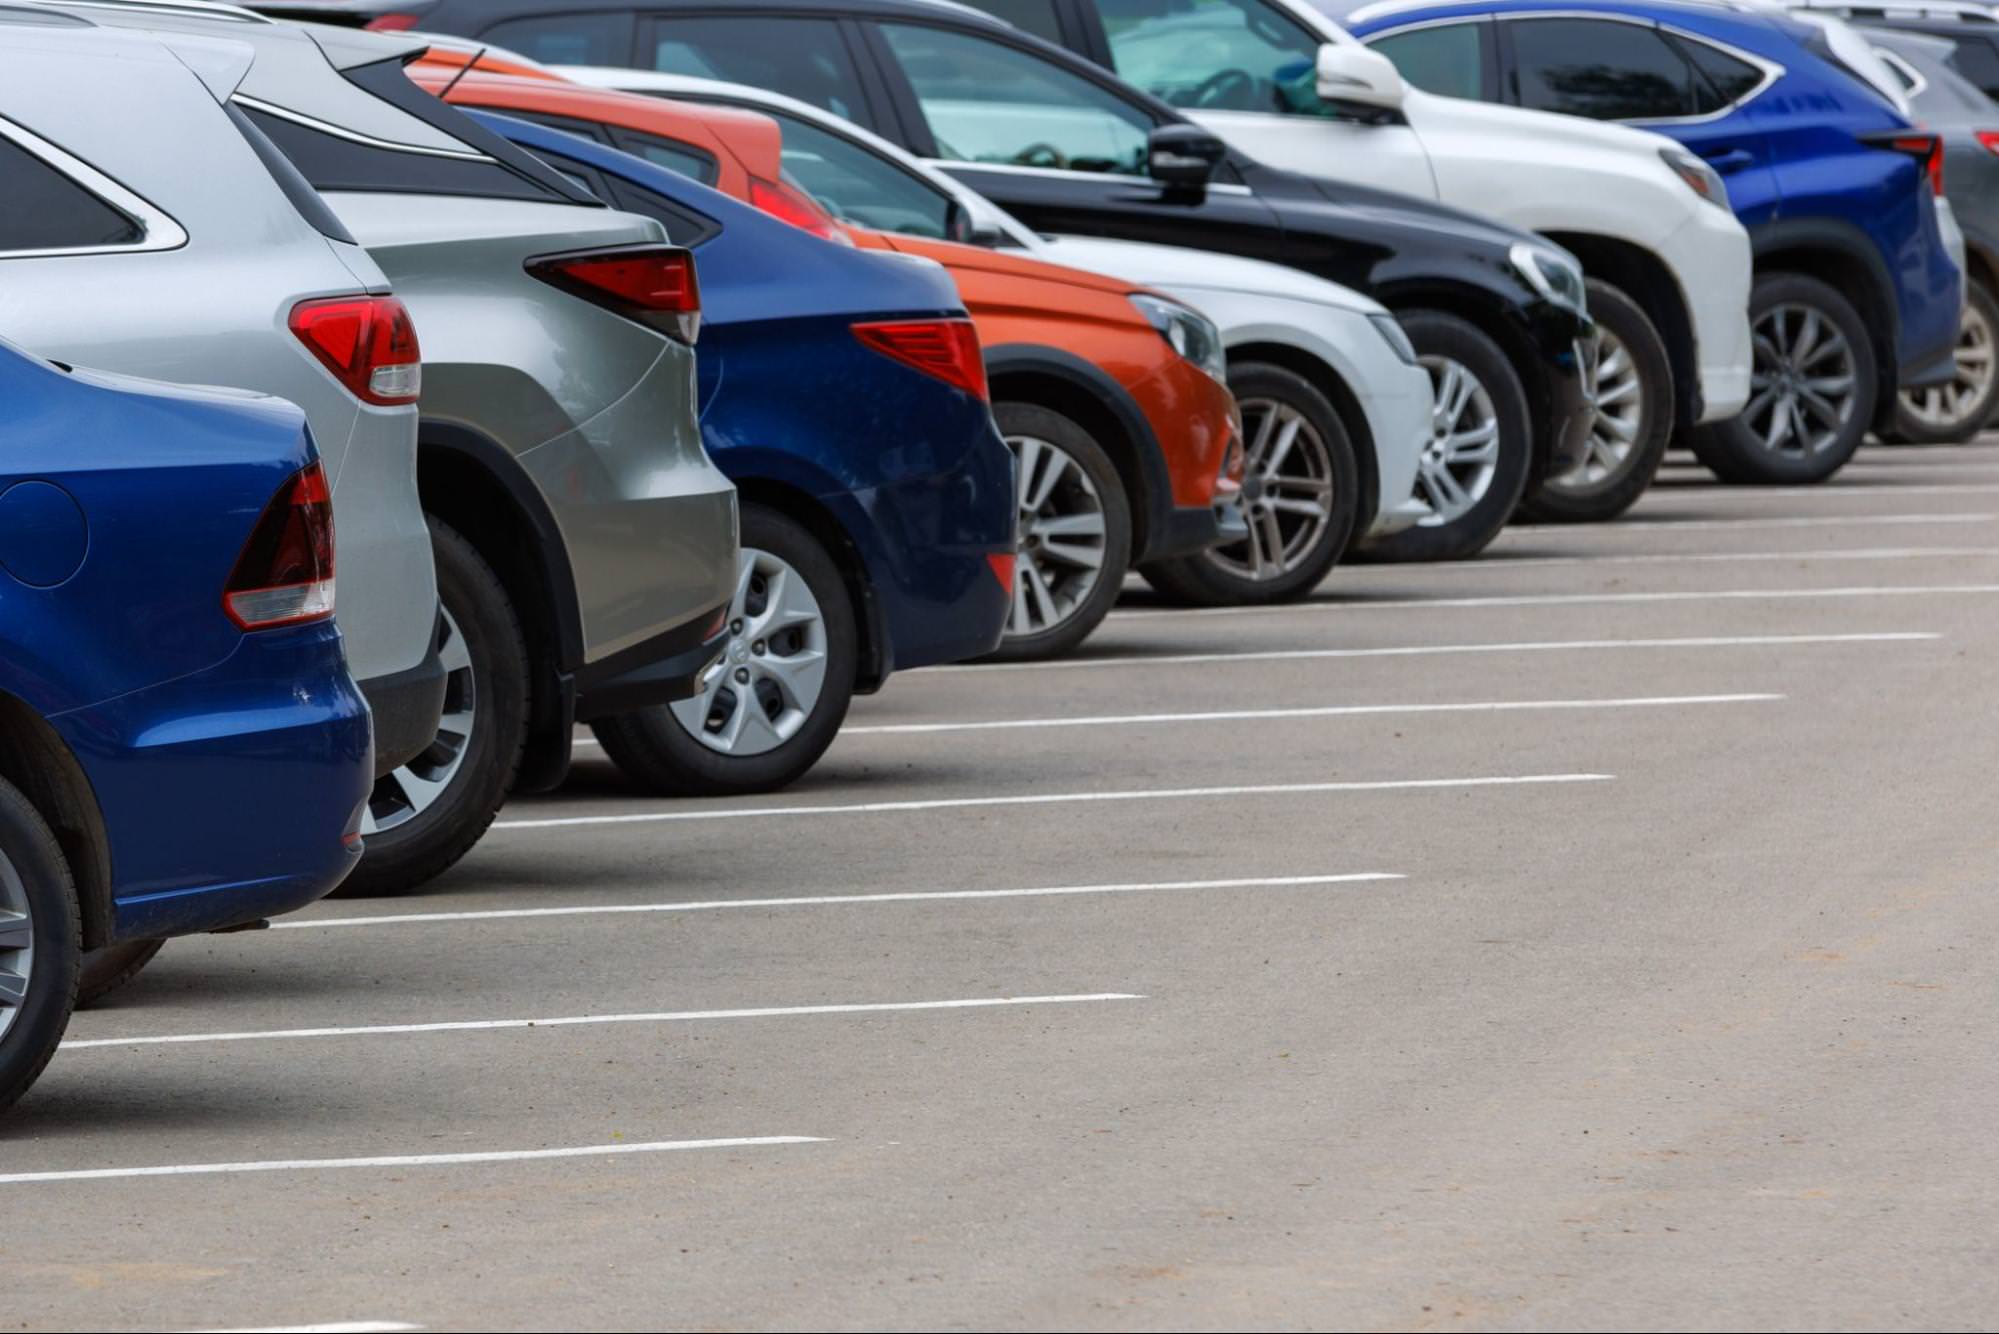 Row of different color cars on asphalt parking lot